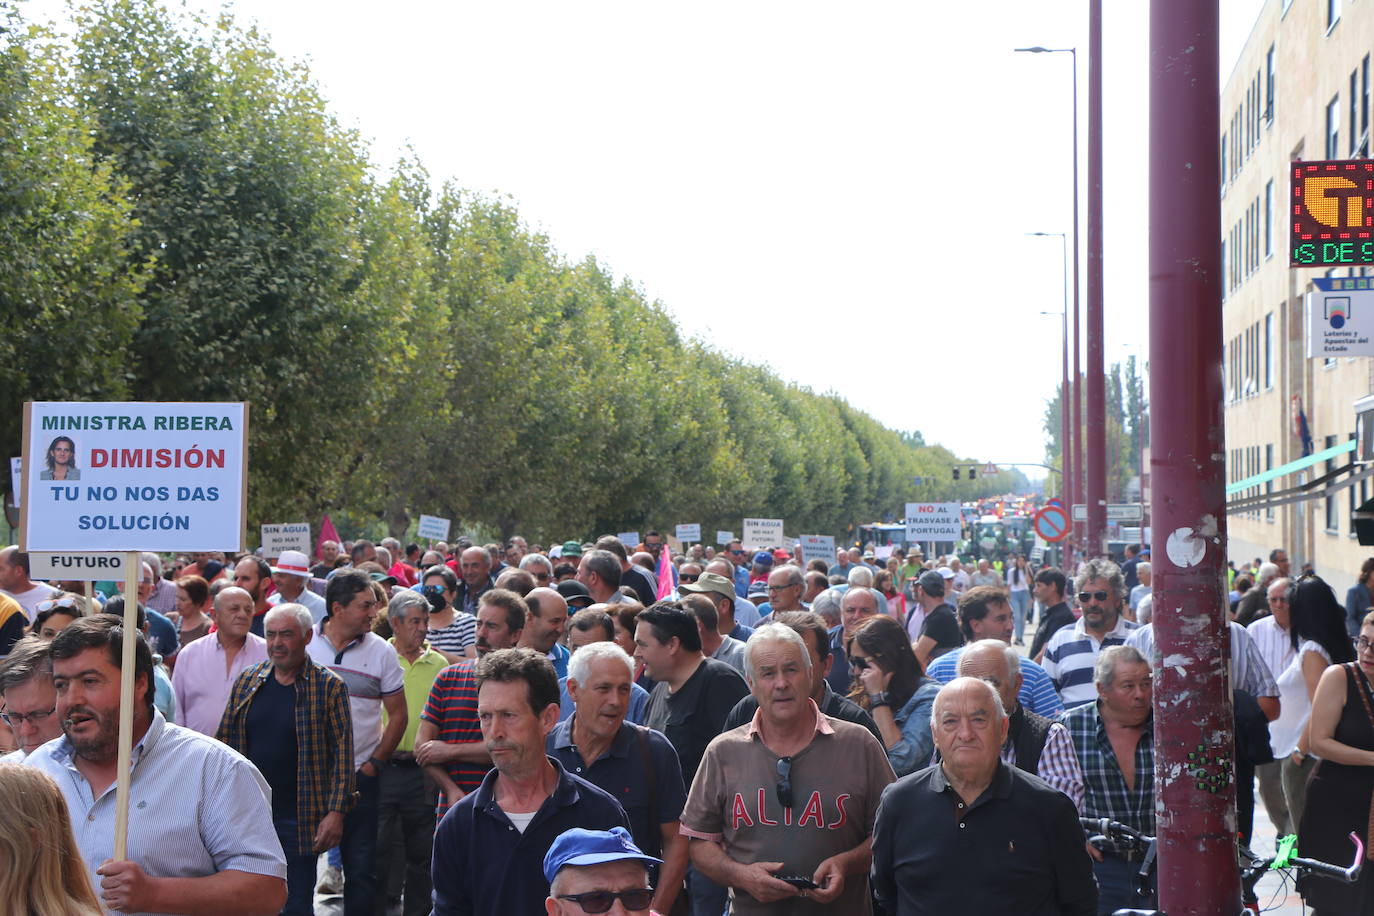 Miles de manifestantes solicitan el fin del desembalse de agua desde León a Portugal.